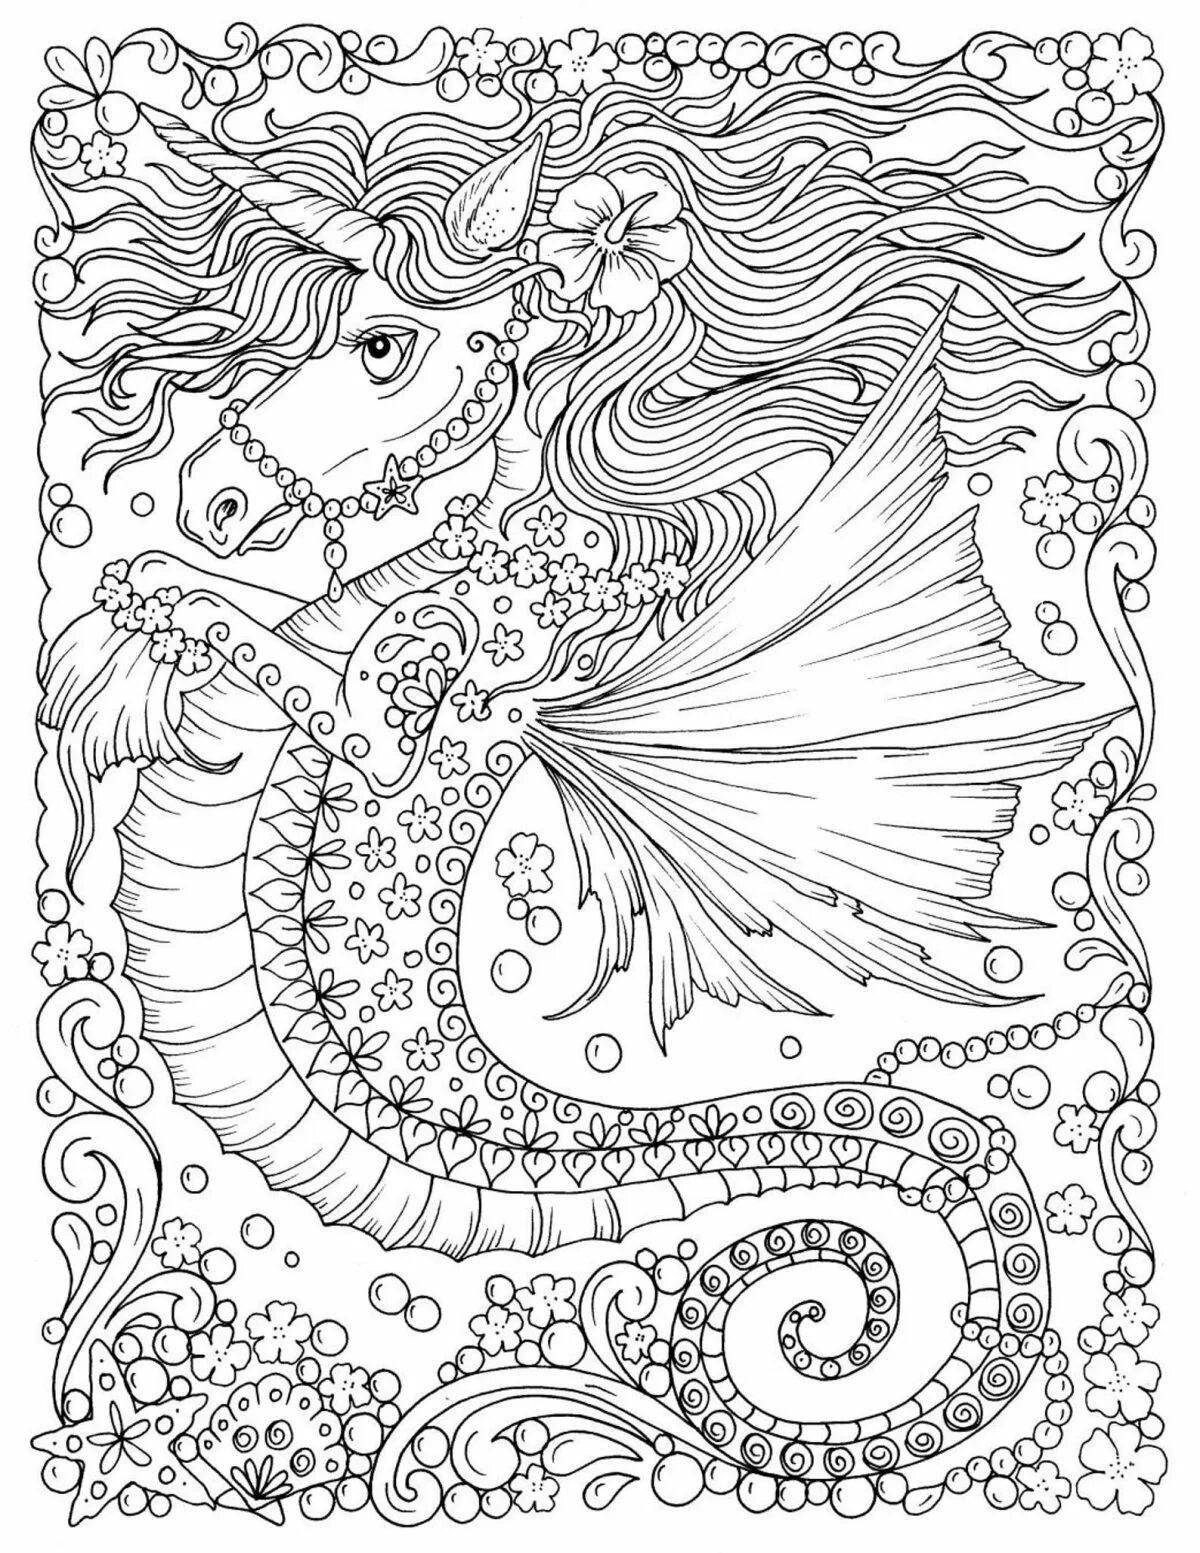 Charming anti-stress mermaid coloring book